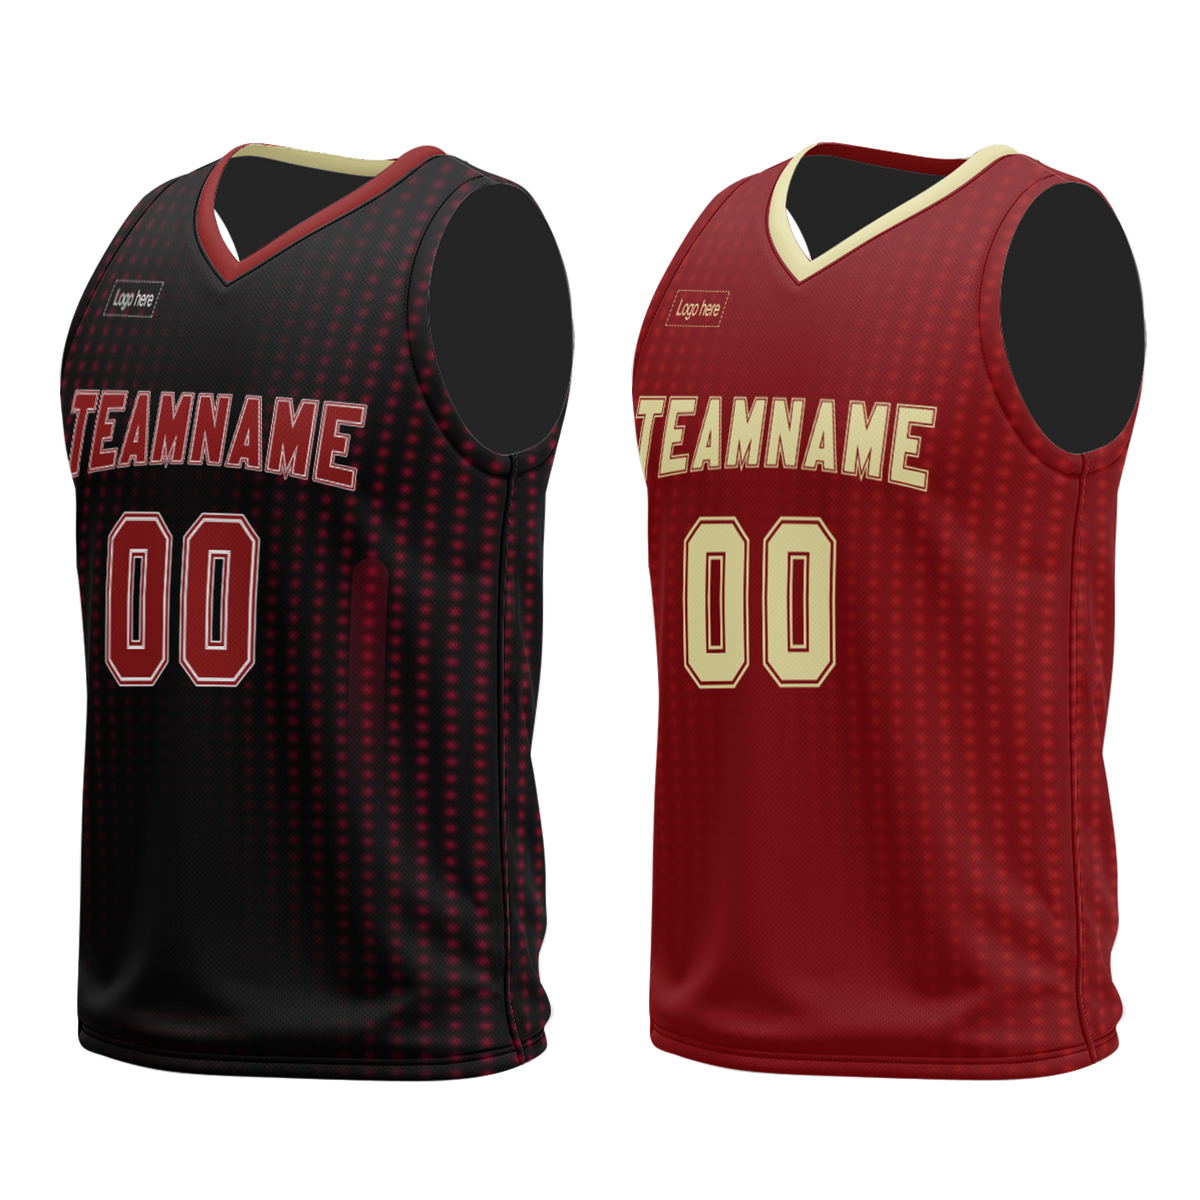 multiple-design-reversible-basketball-jersey-team-set-your-own-print-men-kids-youth-suit-custom-logo-basketball-uniform-jersey-at-cj-pod-5